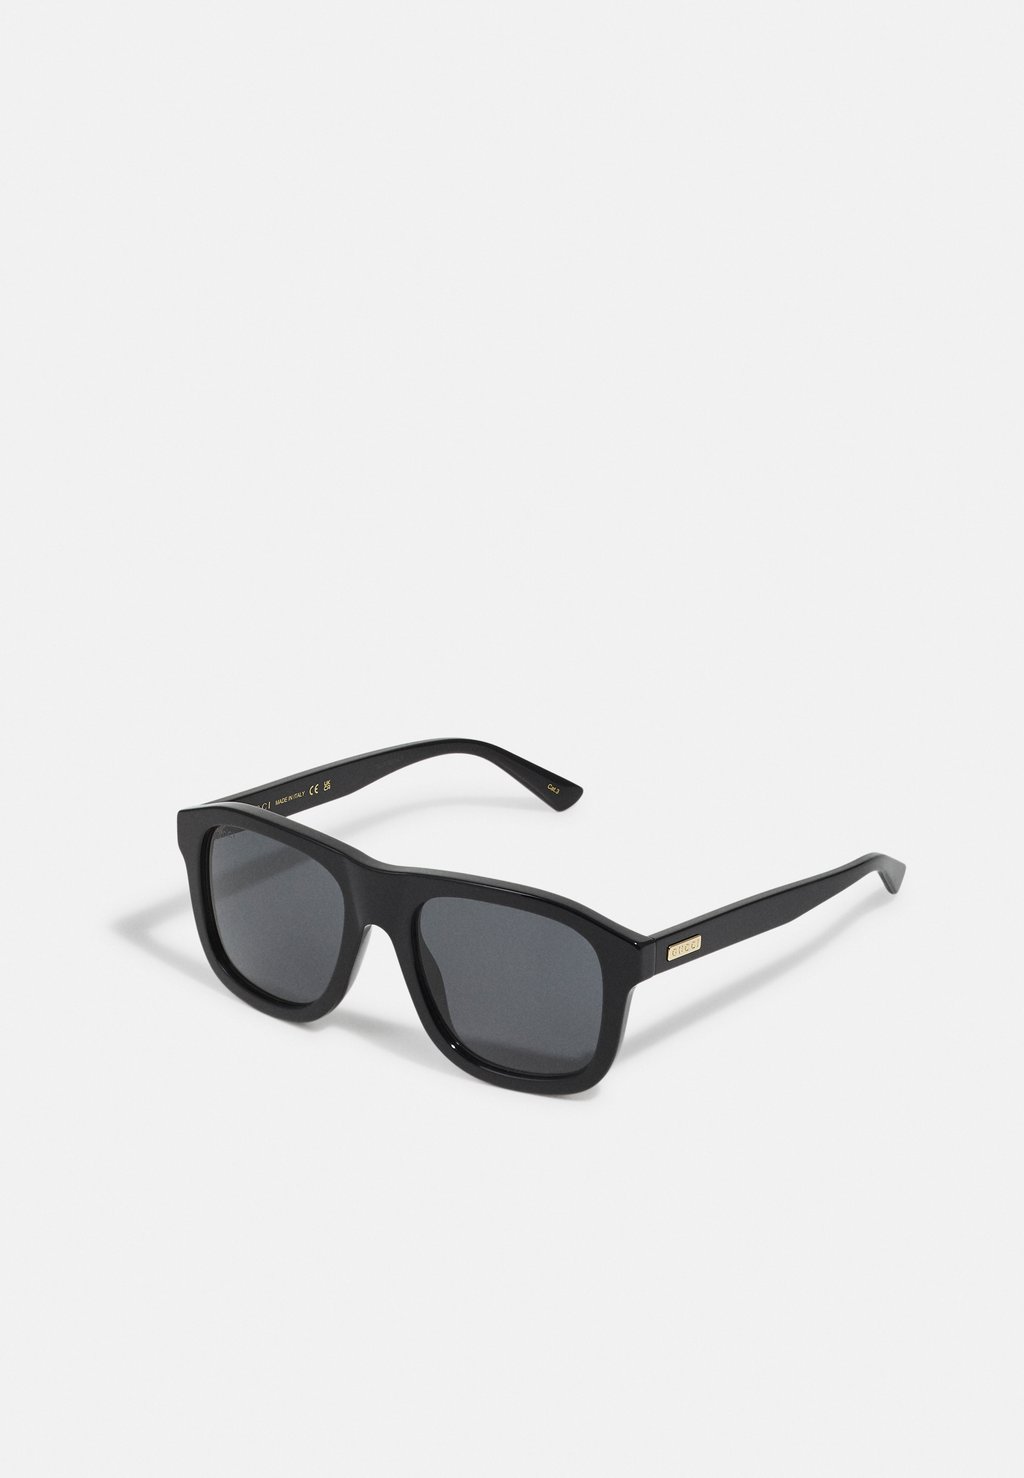 Солнцезащитные очки Unisex Gucci, цвет black/grey солнцезащитные очки unisex gucci цвет black silver coloured